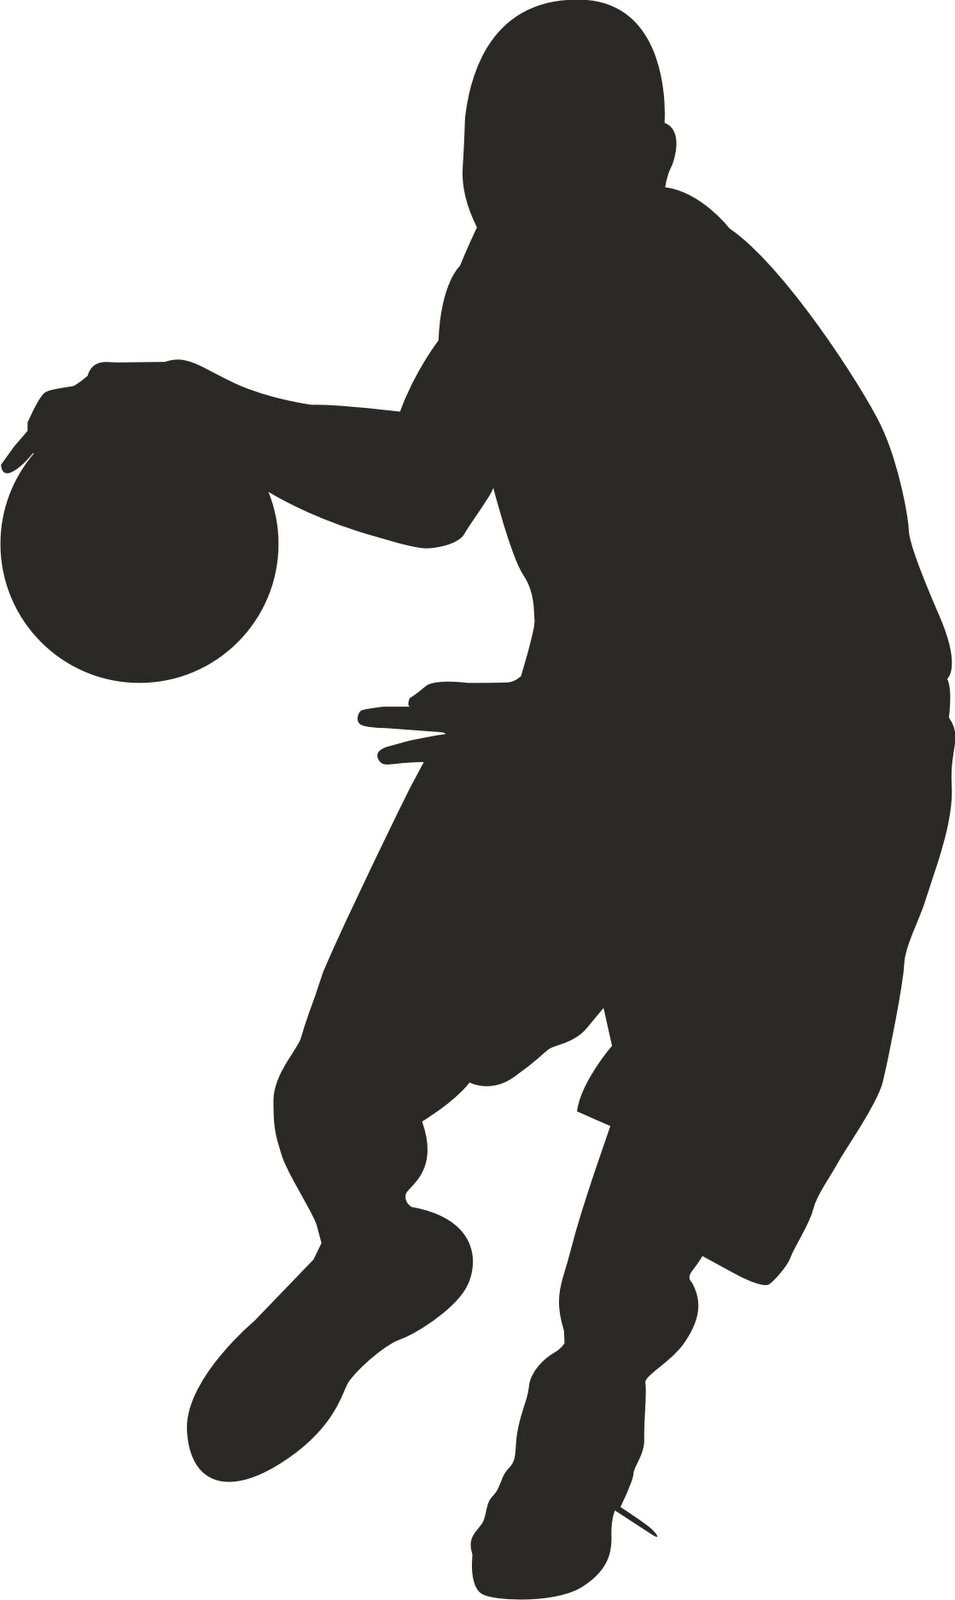 Basketball Silhouette   Clipart Best